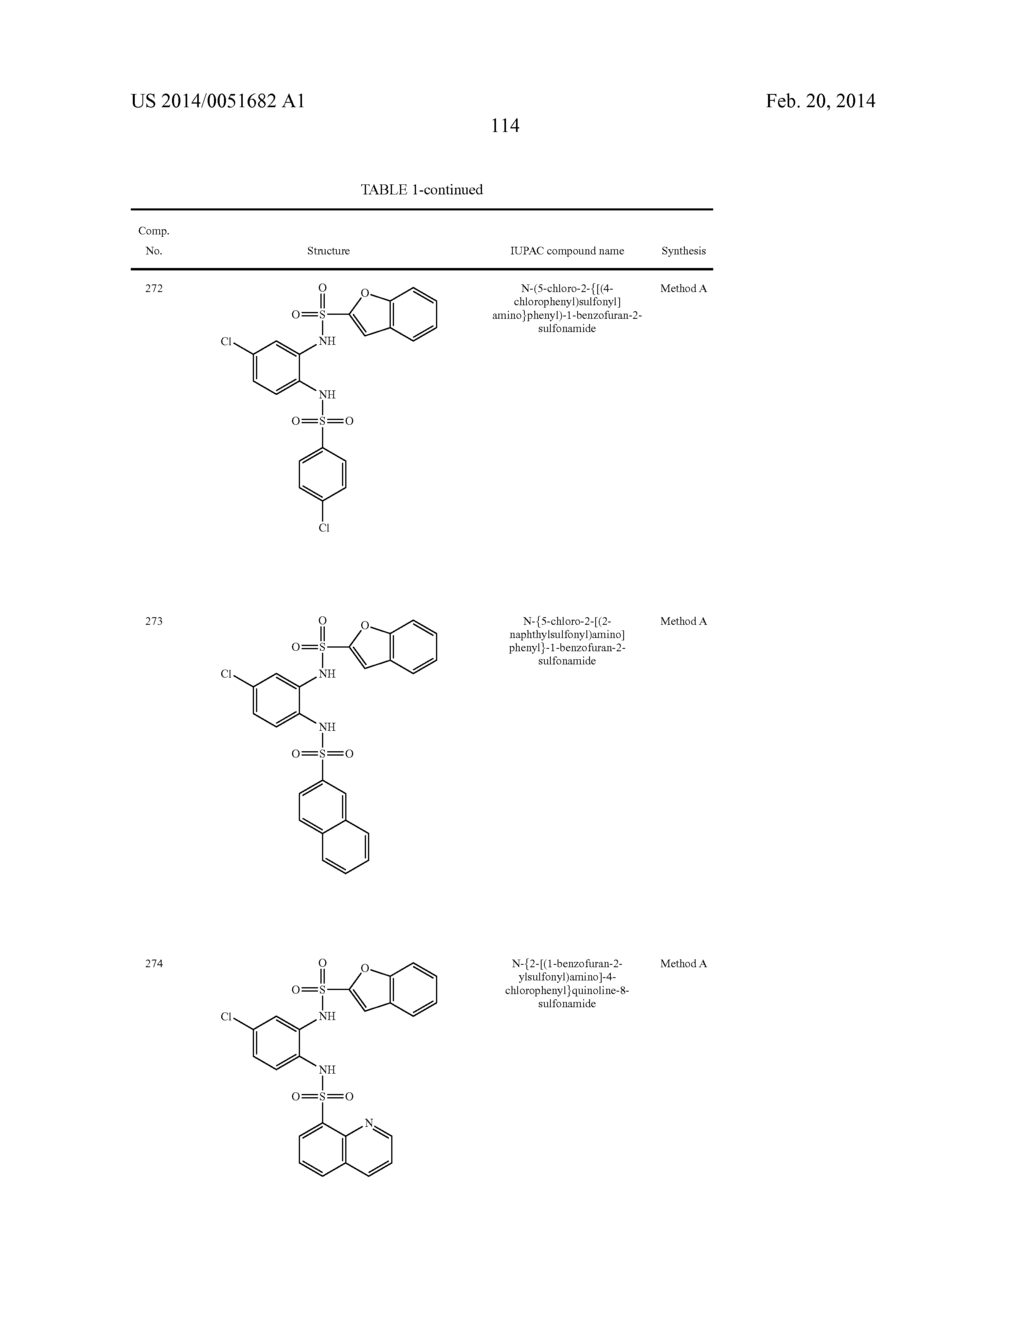 NOVEL 1,2- BIS-SULFONAMIDE DERIVATIVES AS CHEMOKINE RECEPTOR MODULATORS - diagram, schematic, and image 115